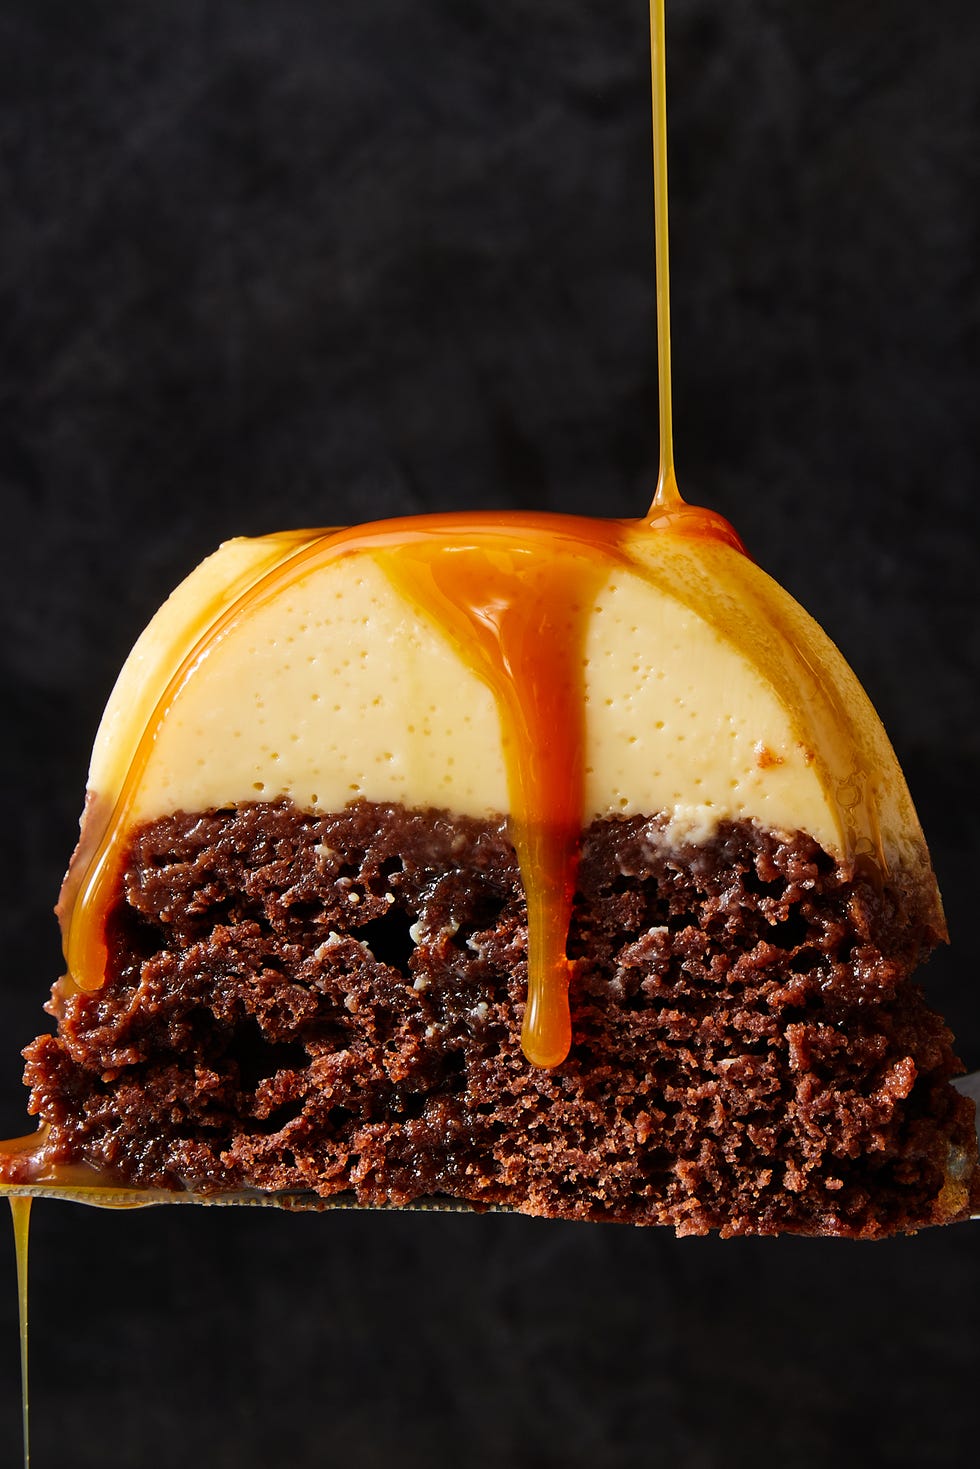 chocoflan with chocolate cake on the bottom and flan on top